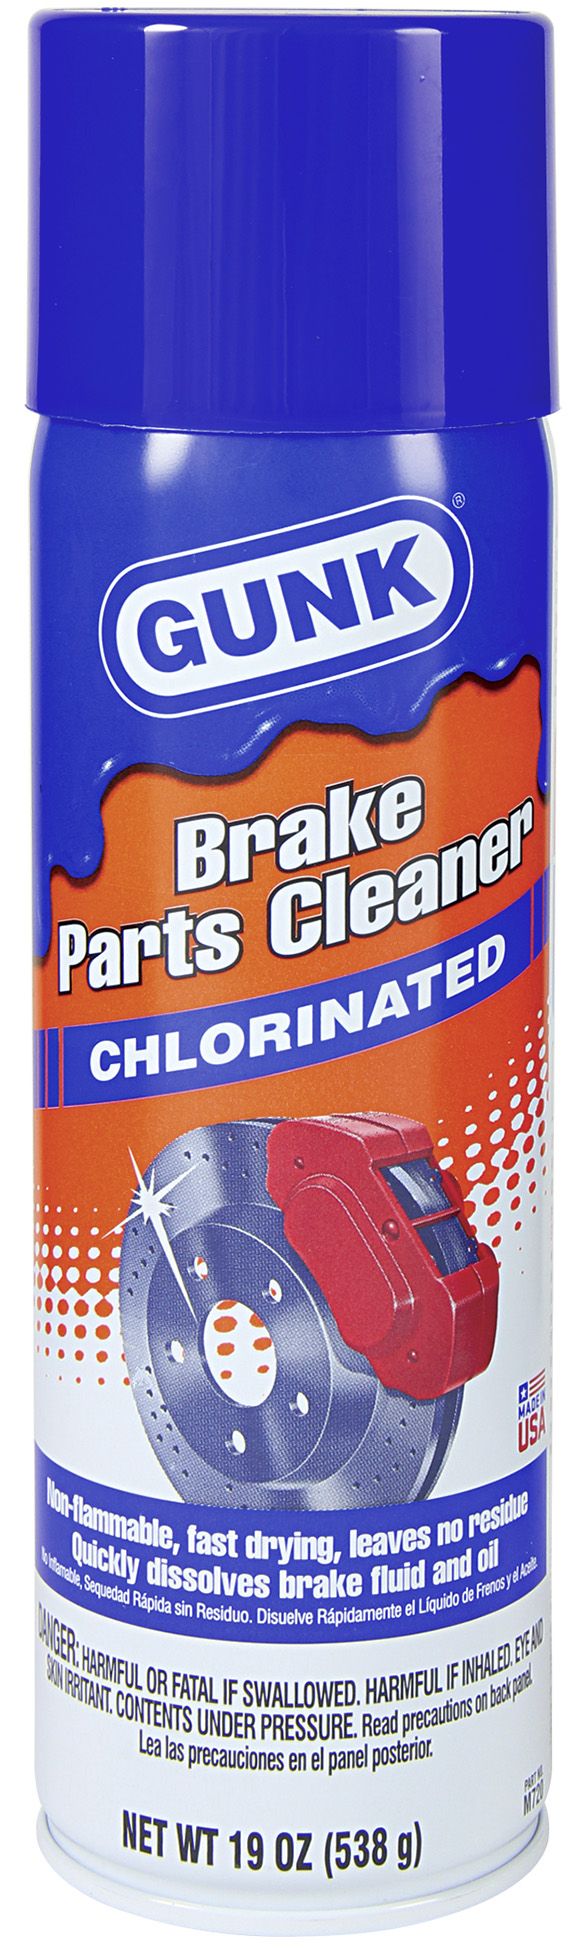 19 oz. Chlorinated Brake Cleaner Pack of 12